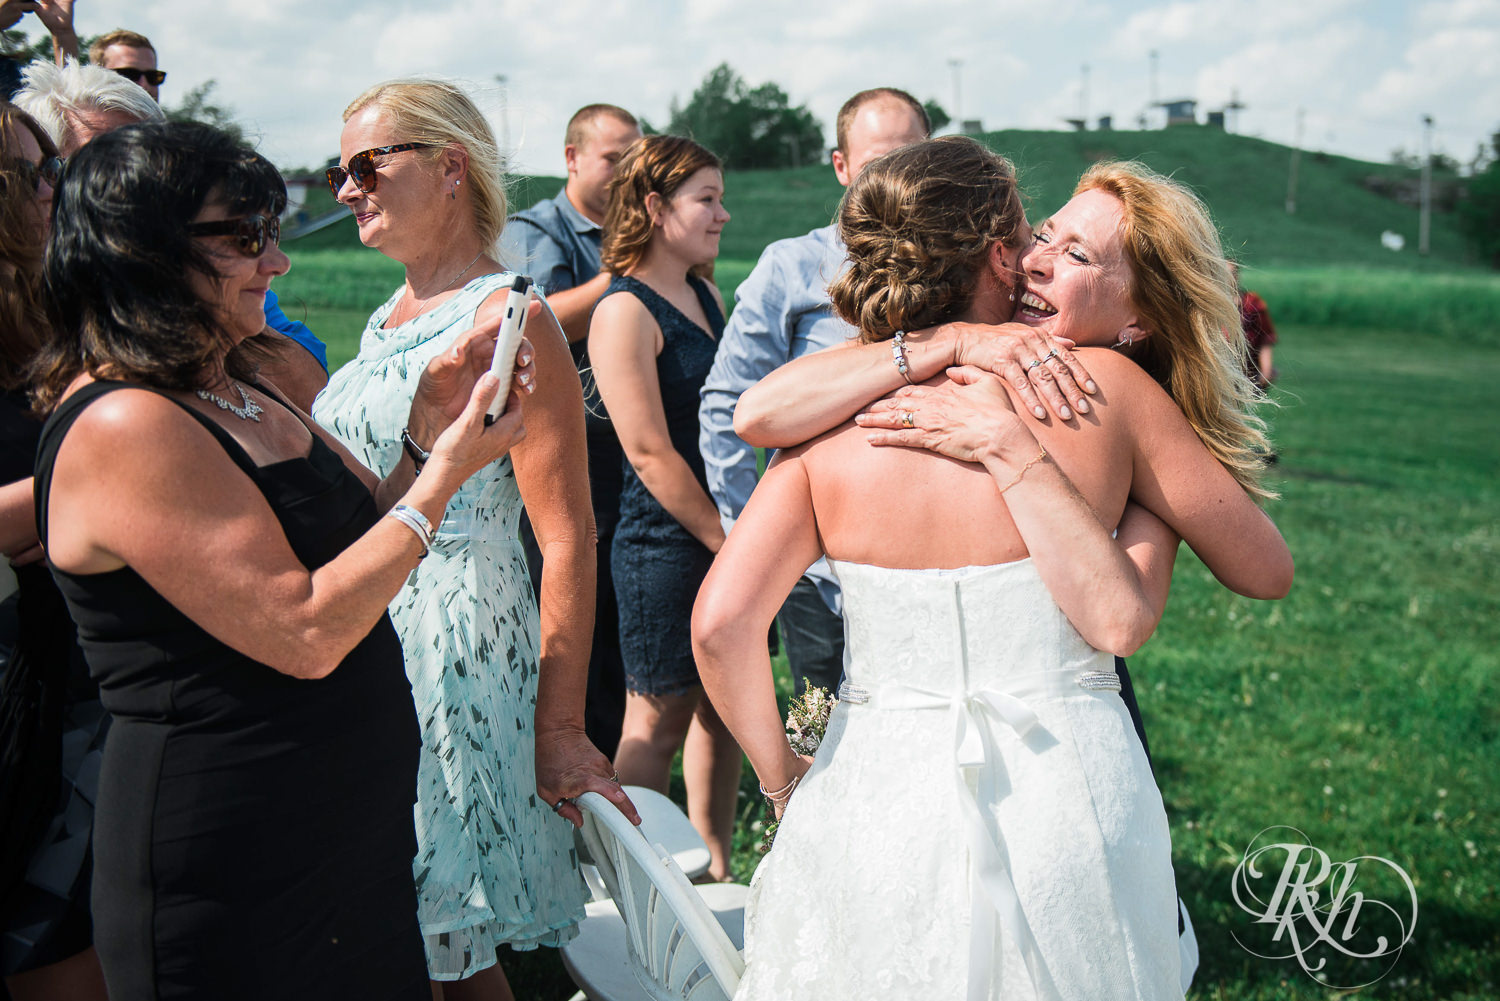 Lesbian brides hug guests at Spirit Mountain in Duluth, Minnesota.